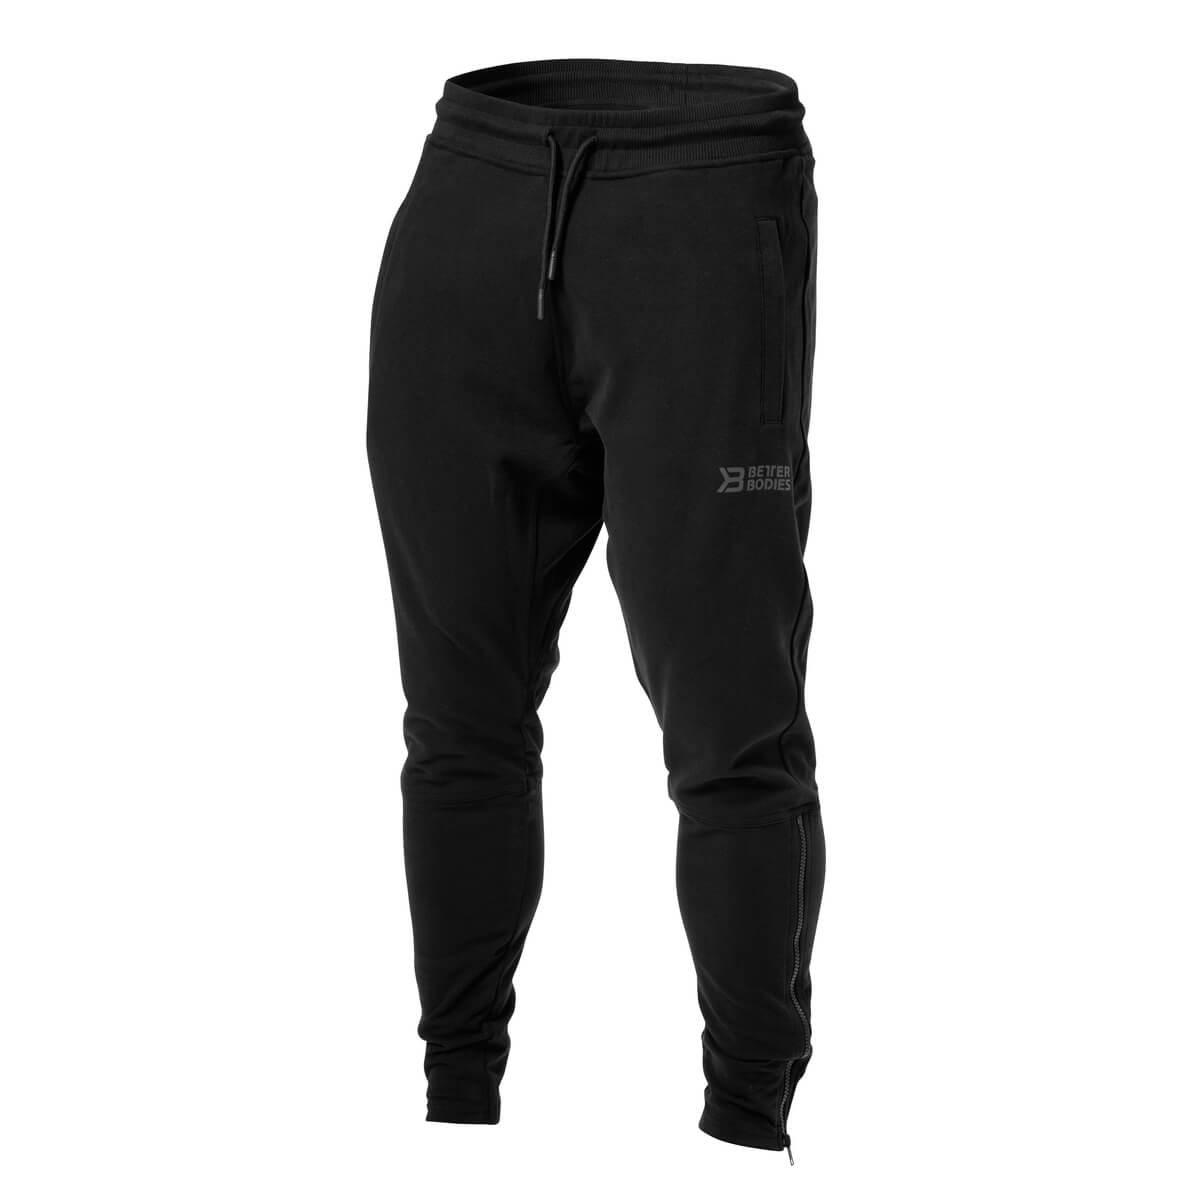 Harlem Zip Pants, black, Better Bodies